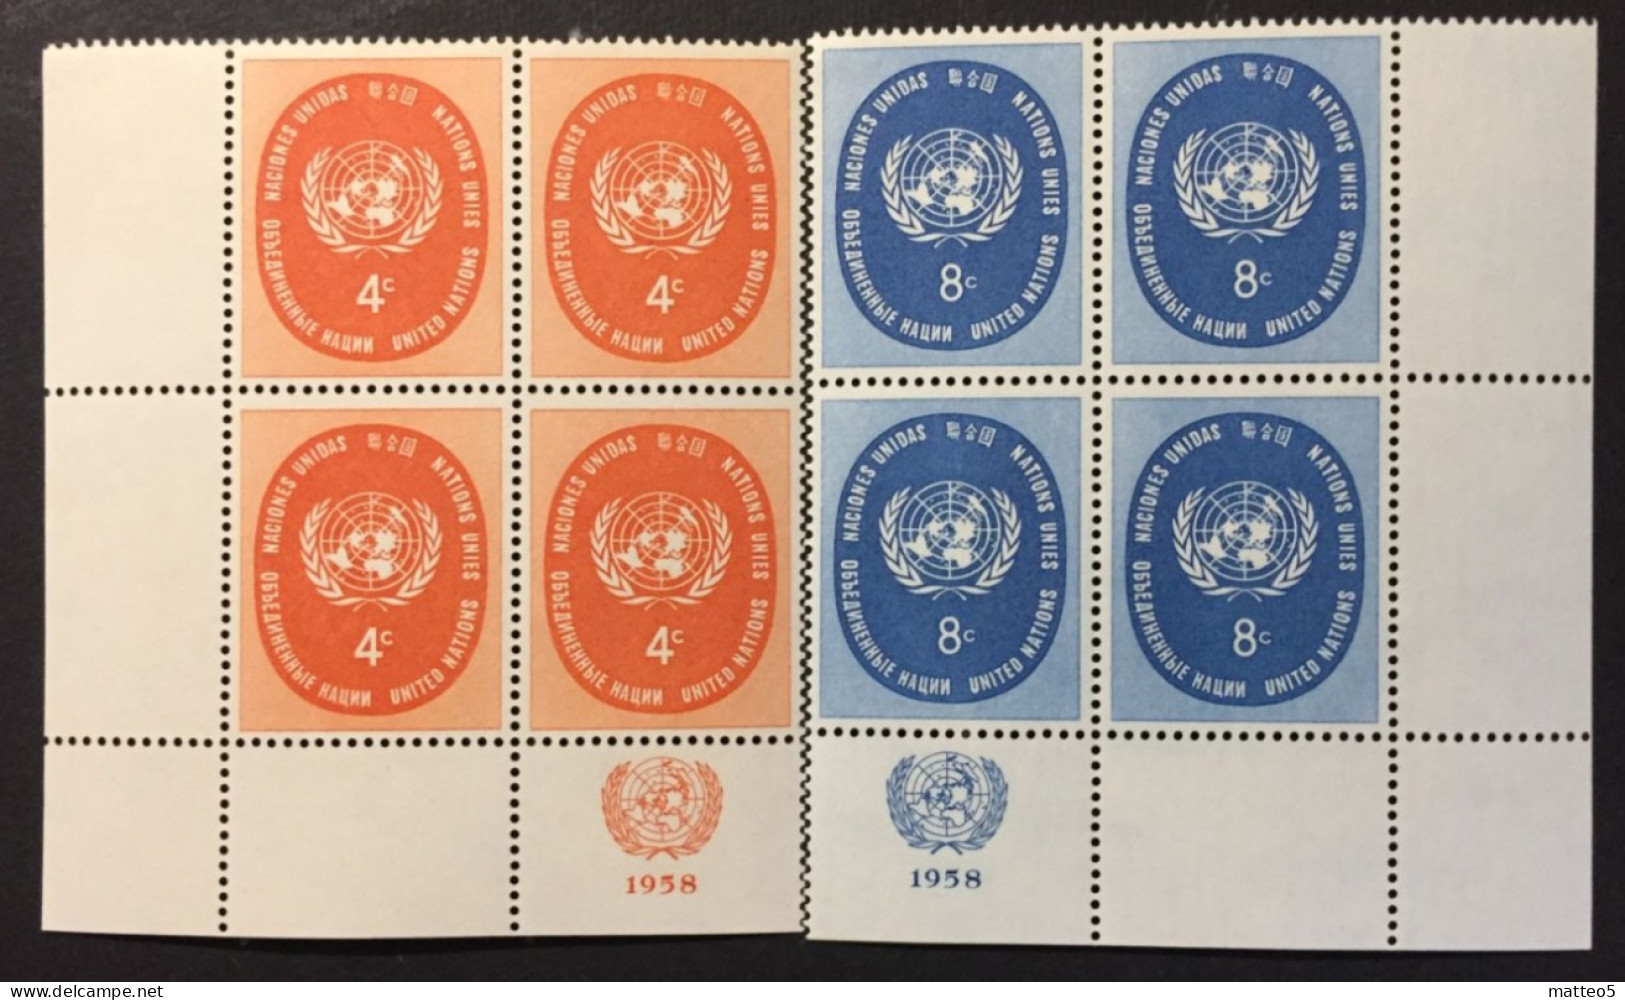 1958 - United Nations UNO UN ONU - UN Symbol - 2 X4 Stamps Unused - Neufs